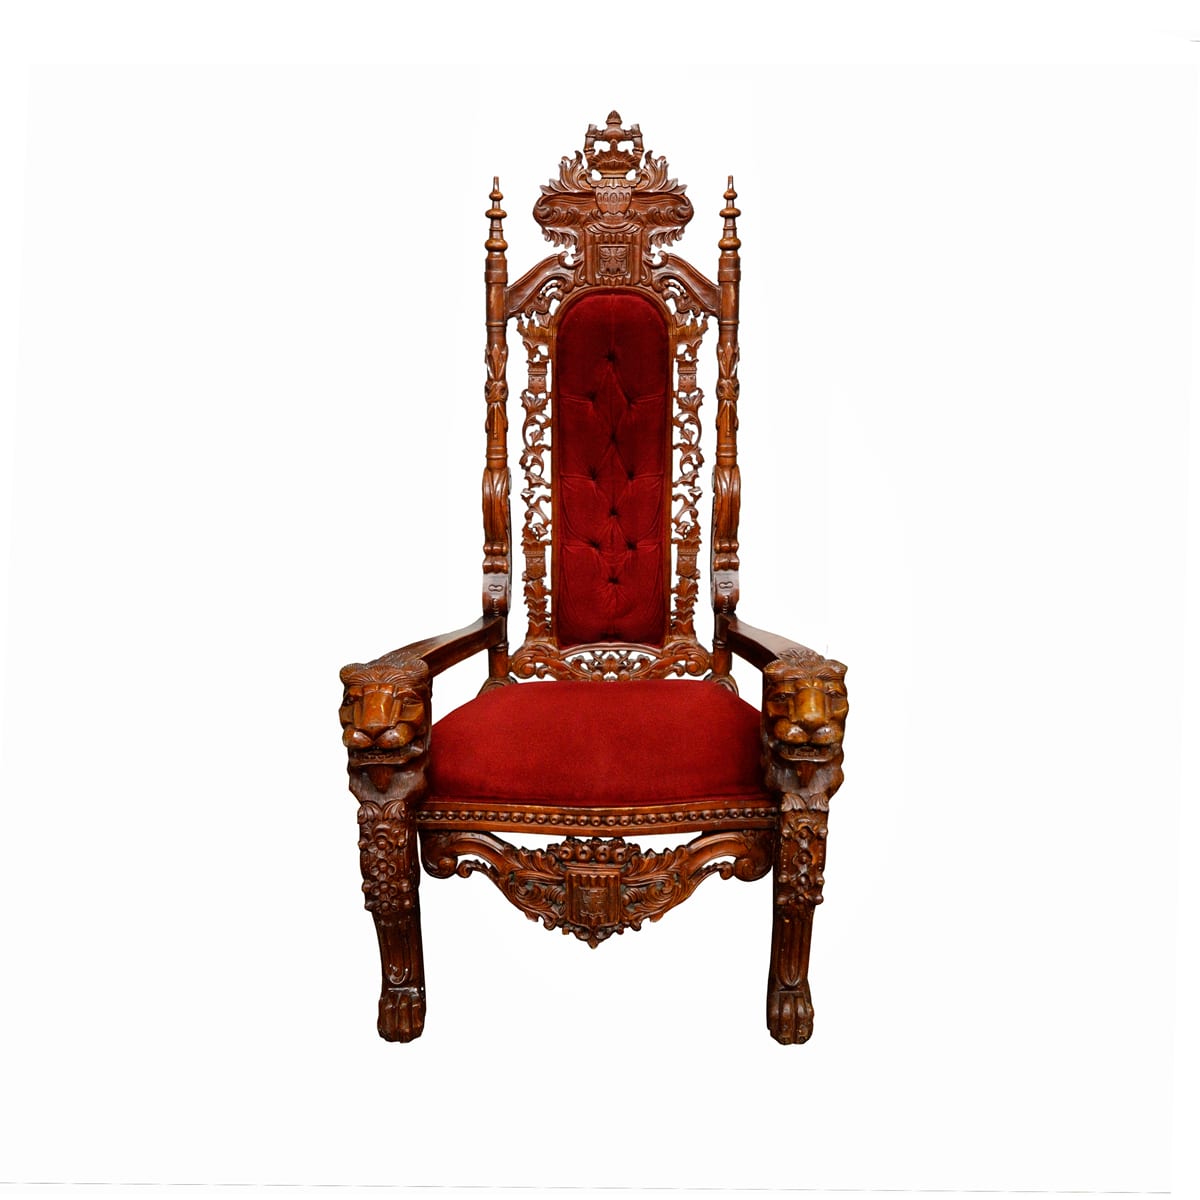 Throne 7 – Ornate Red Cushion Throne